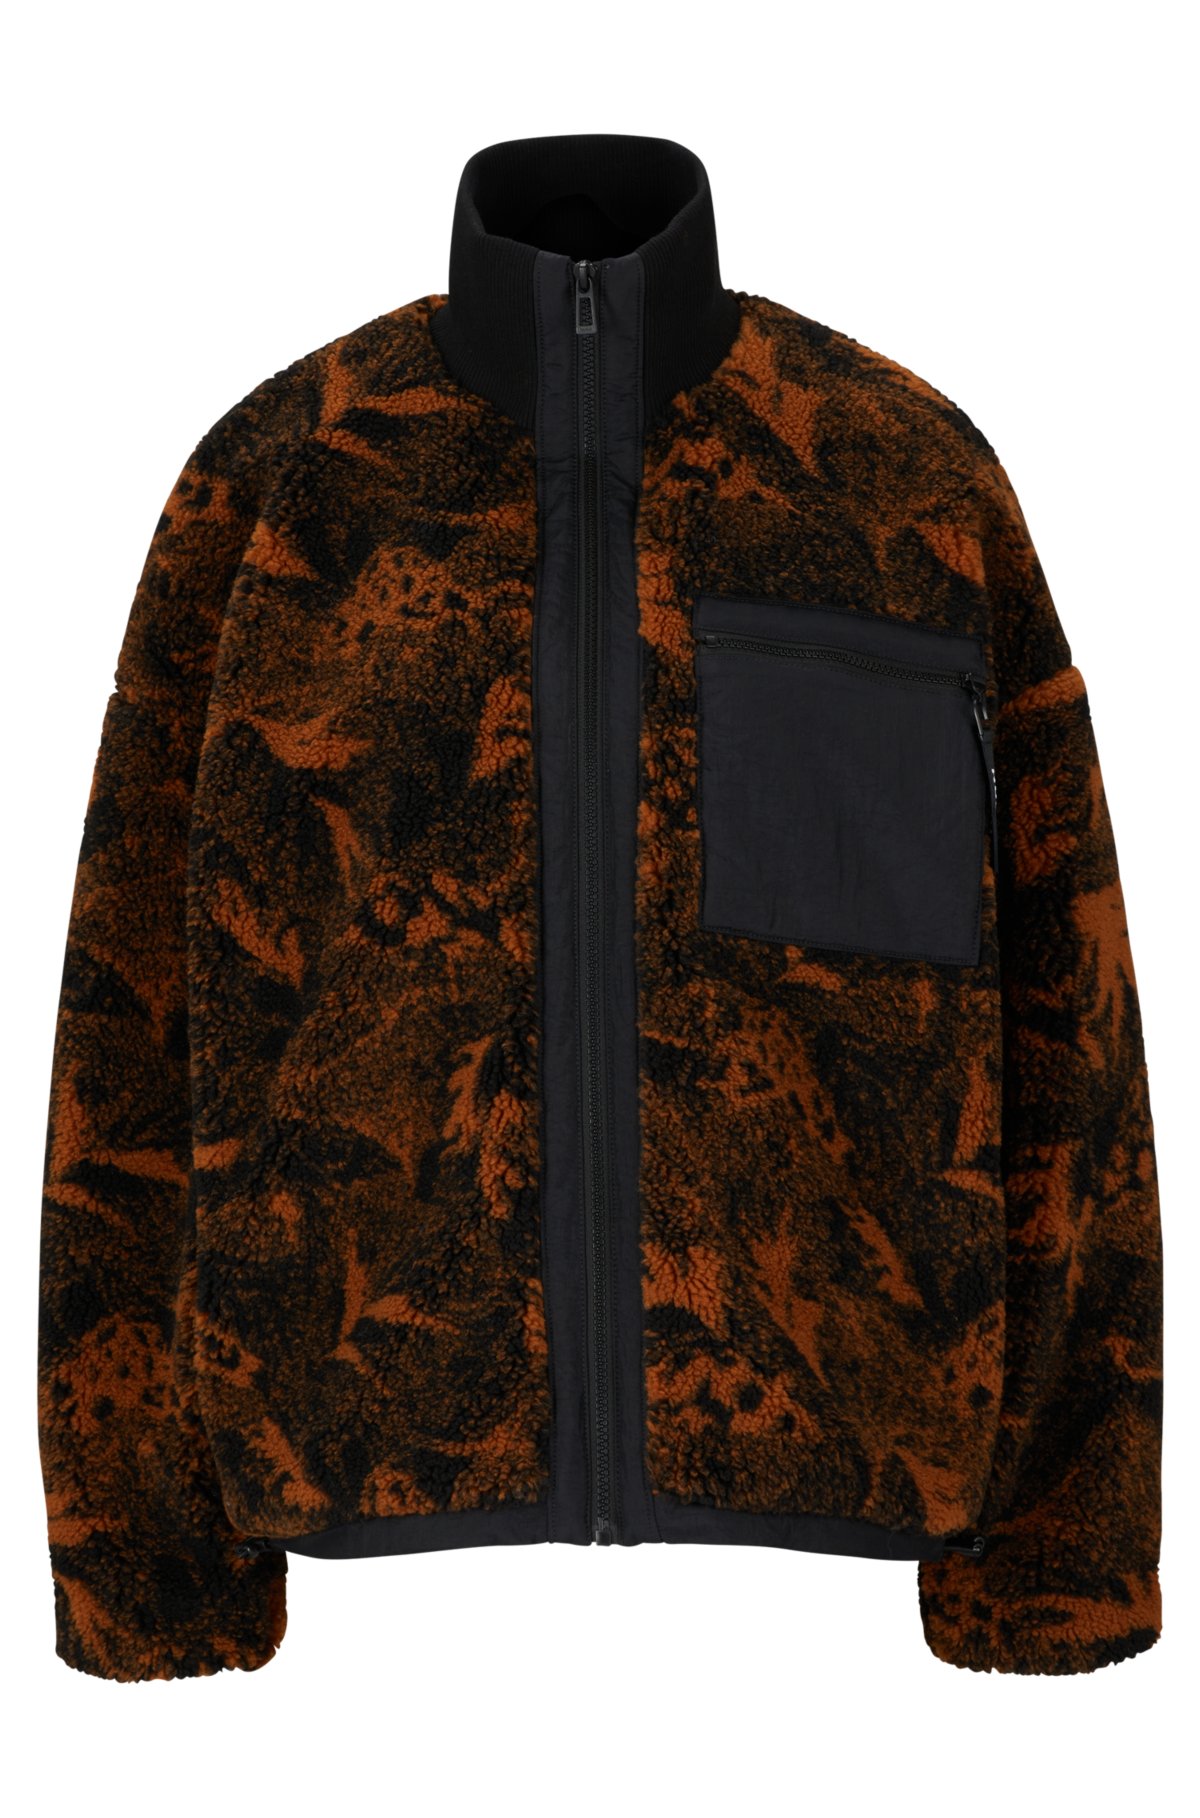 Monogram Fleece Jacquard Jacket, Burberry